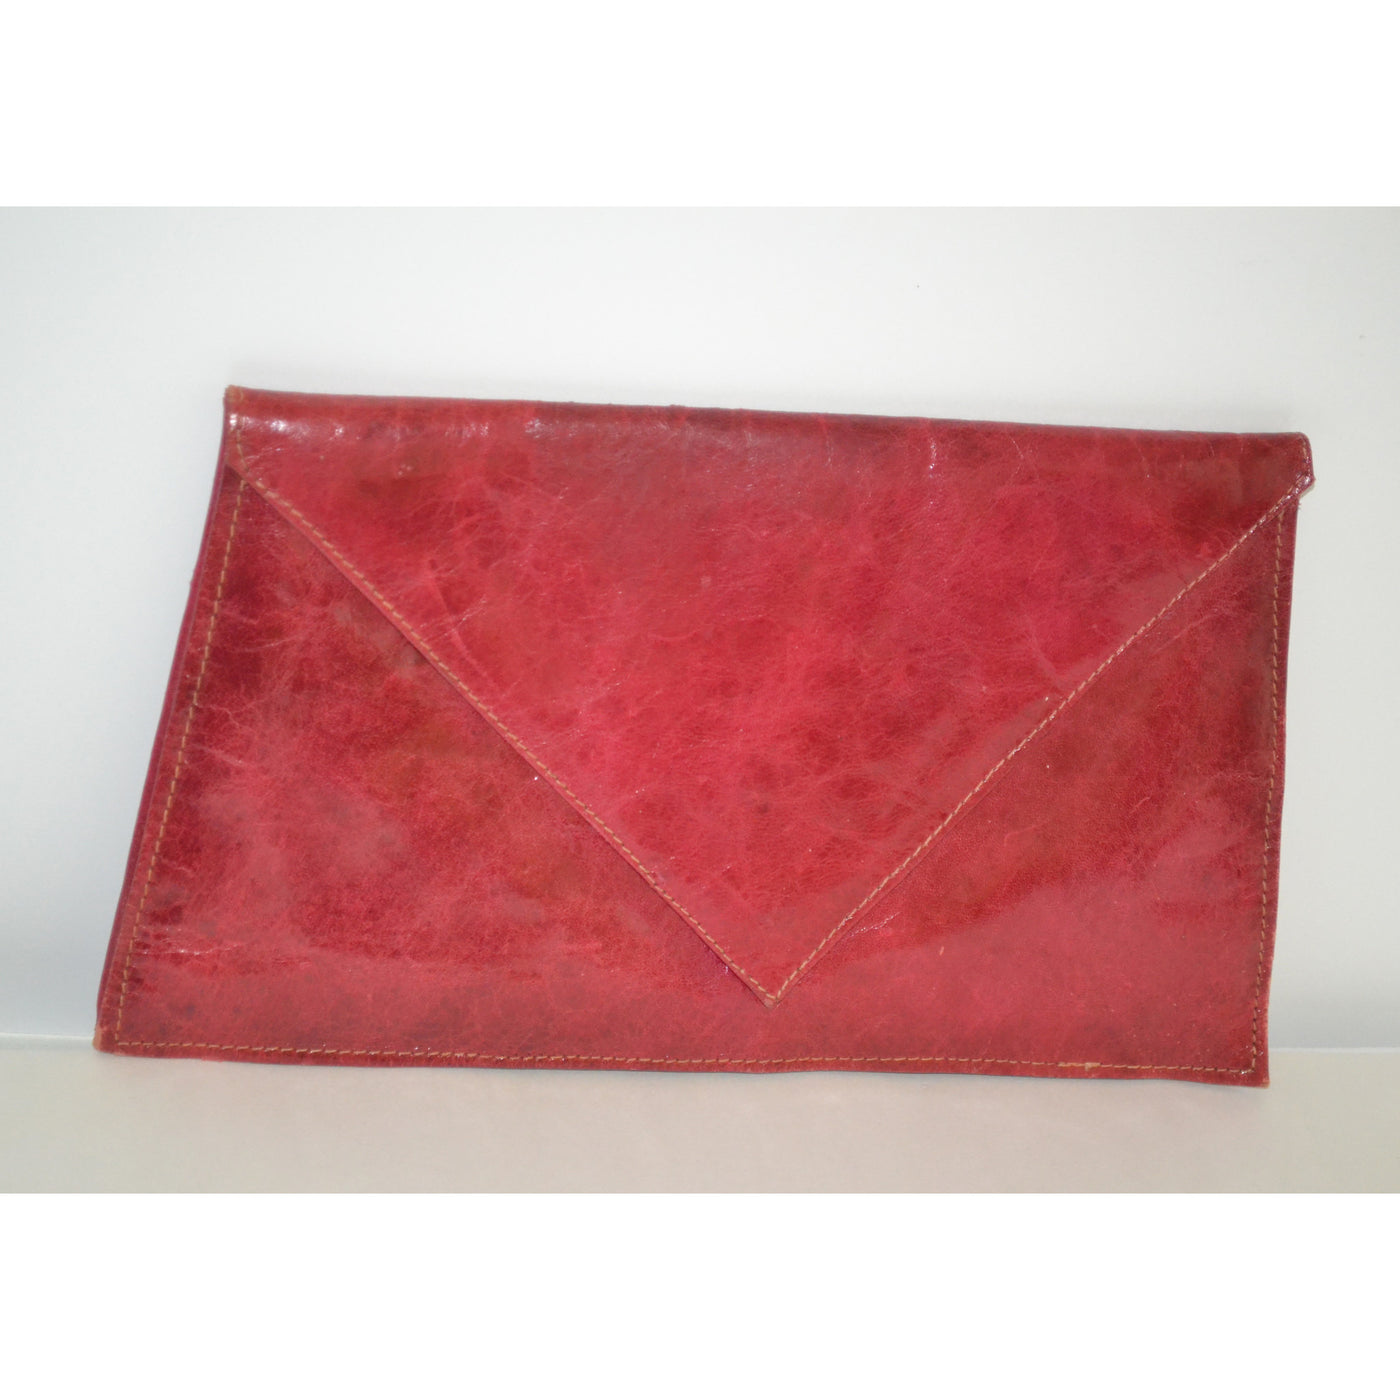 Vintage Red Leather Envelope Clutch Purse